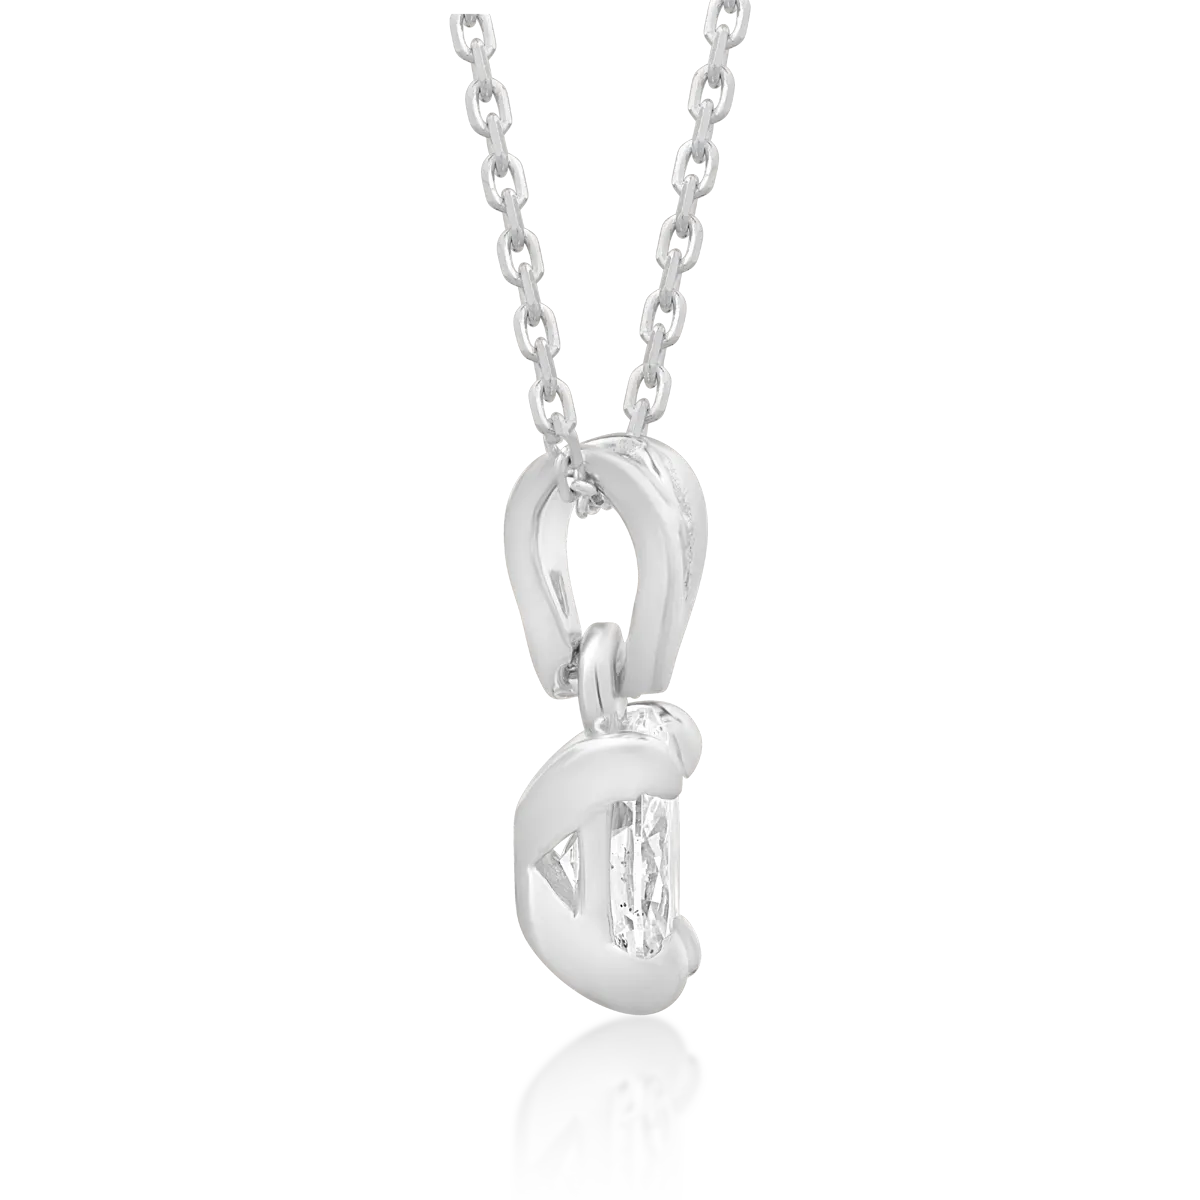 18K white gold pendant chain with 0.4ct diamond